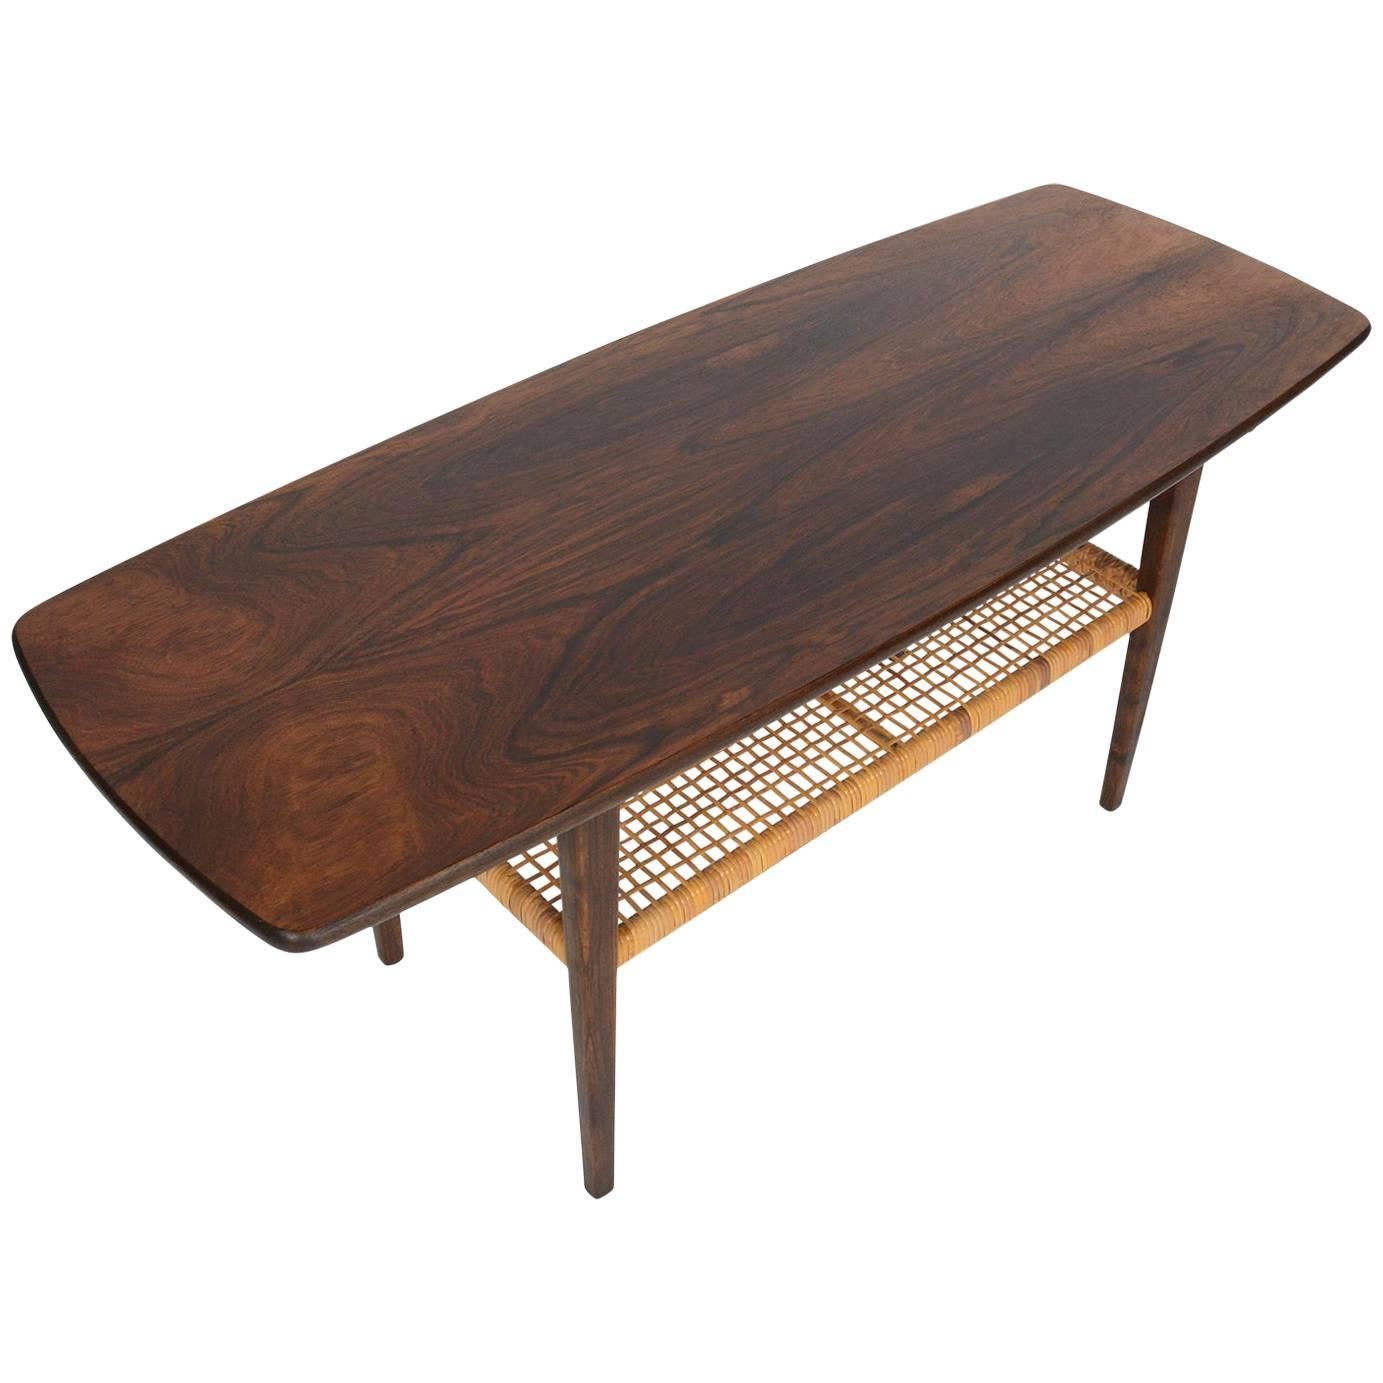 Danish Mid-Century Modern Brazilian Rosewood adn Cane Surfboard Coffee Table